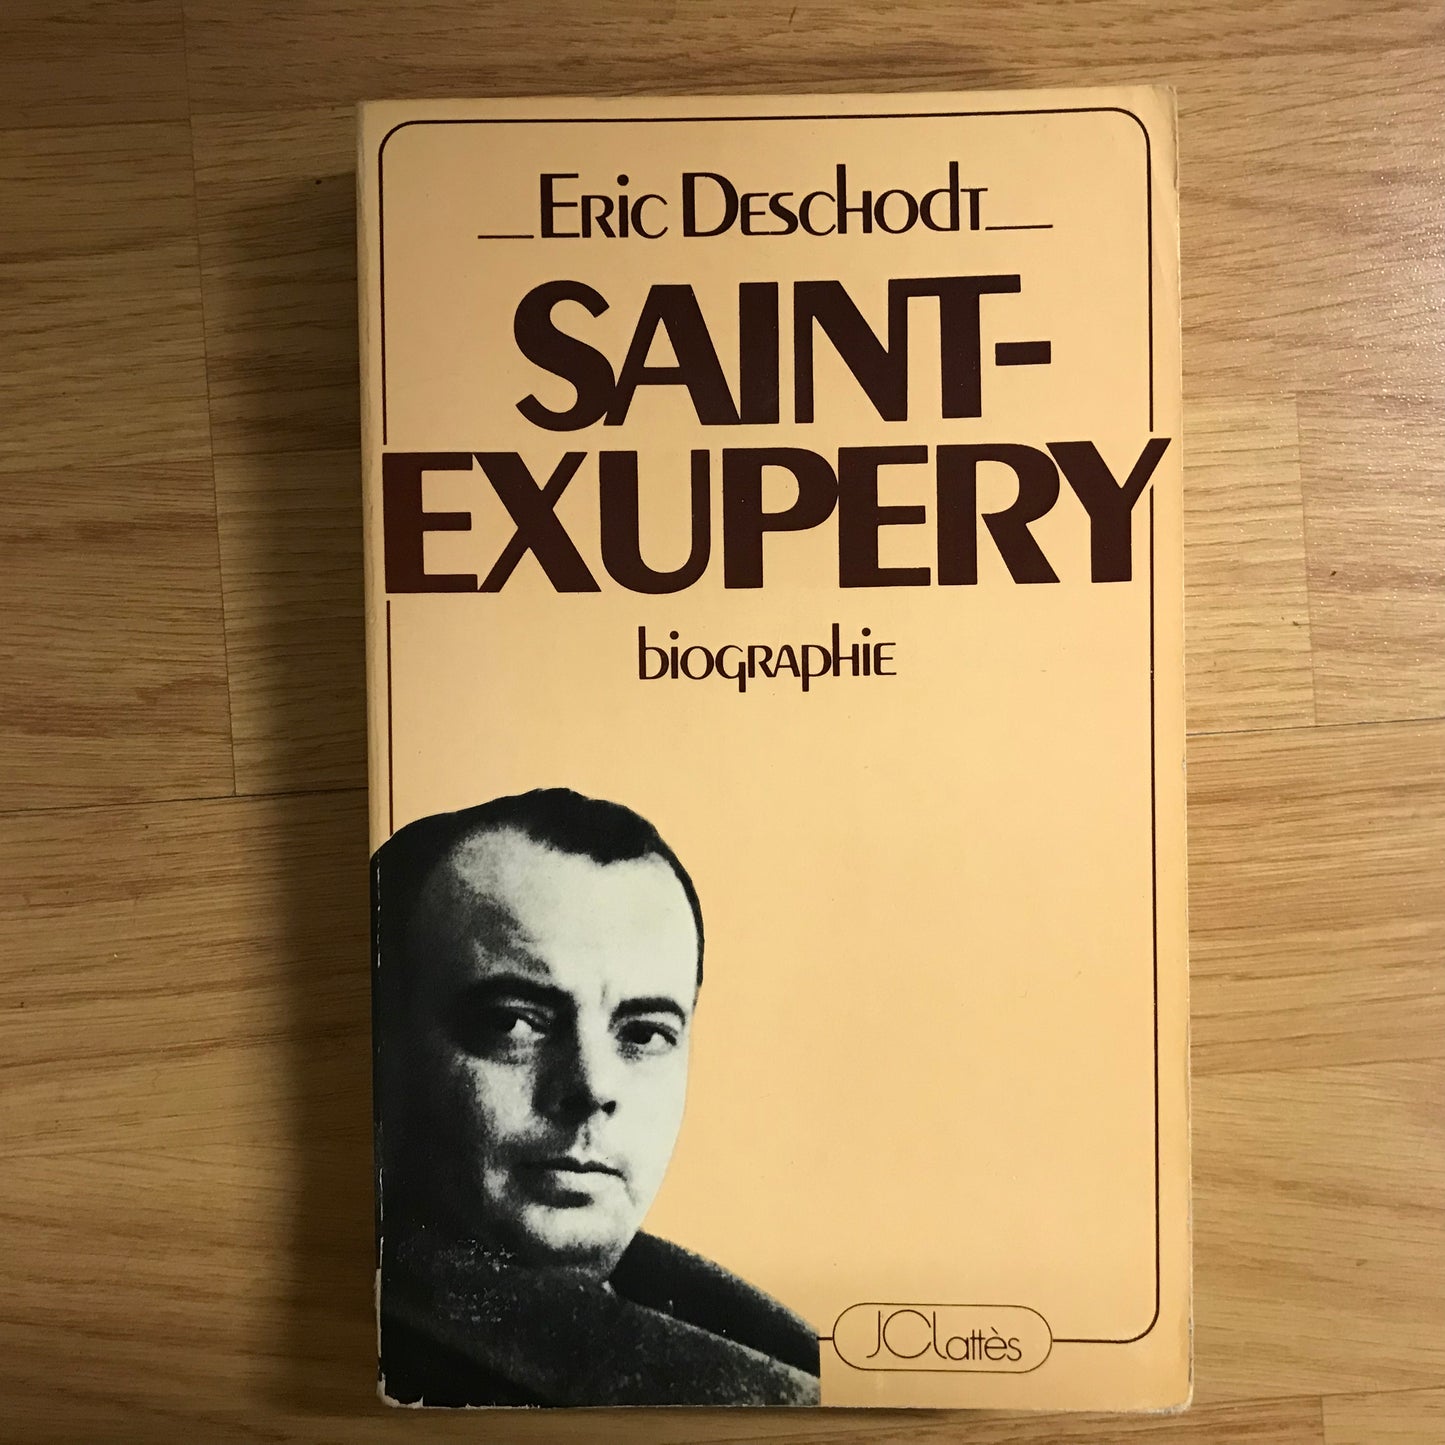 Saint-Exupery, biographie - Eric Deschodt